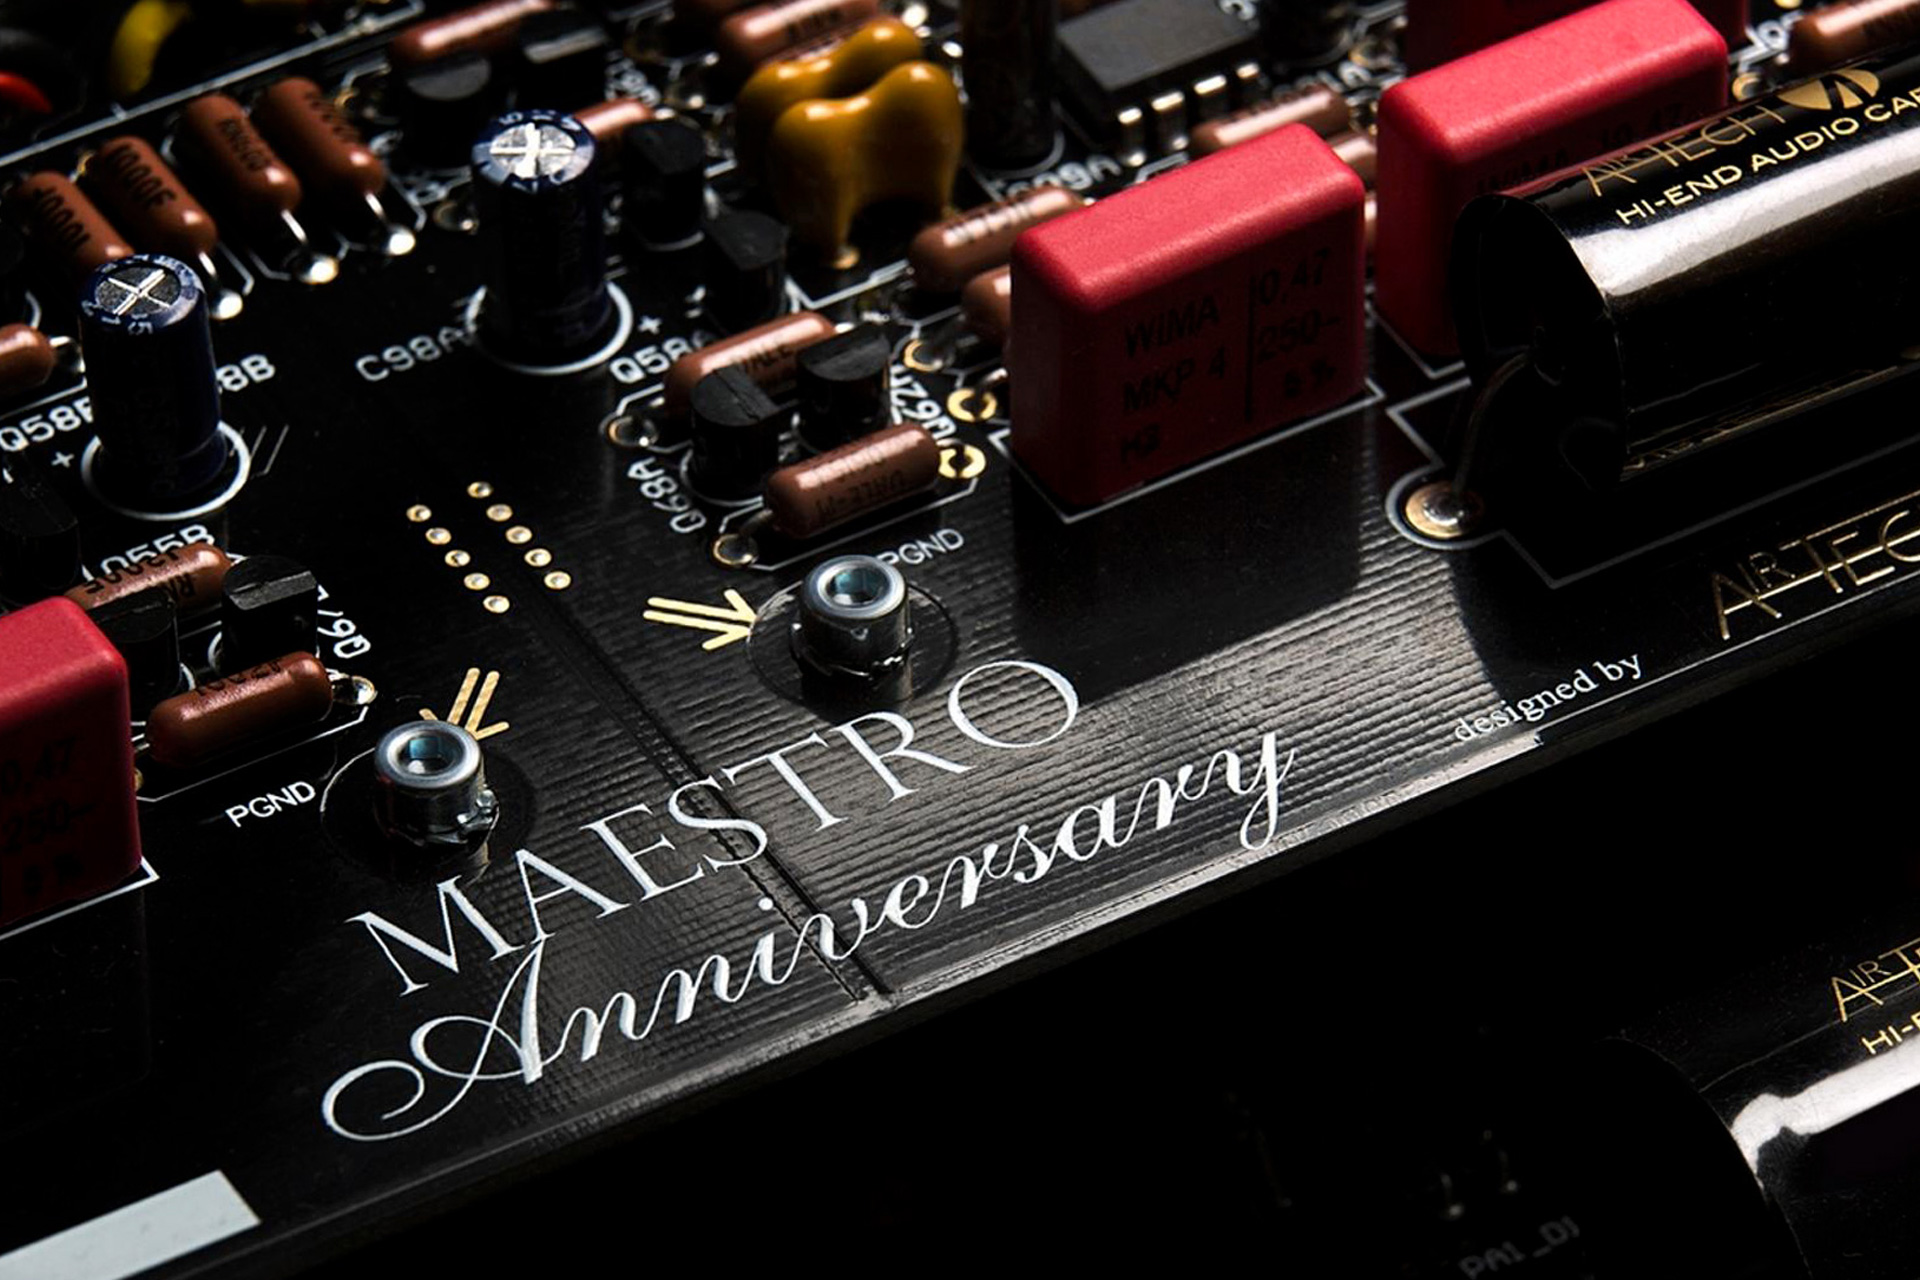 Audio Analogue Maestro Anniversary